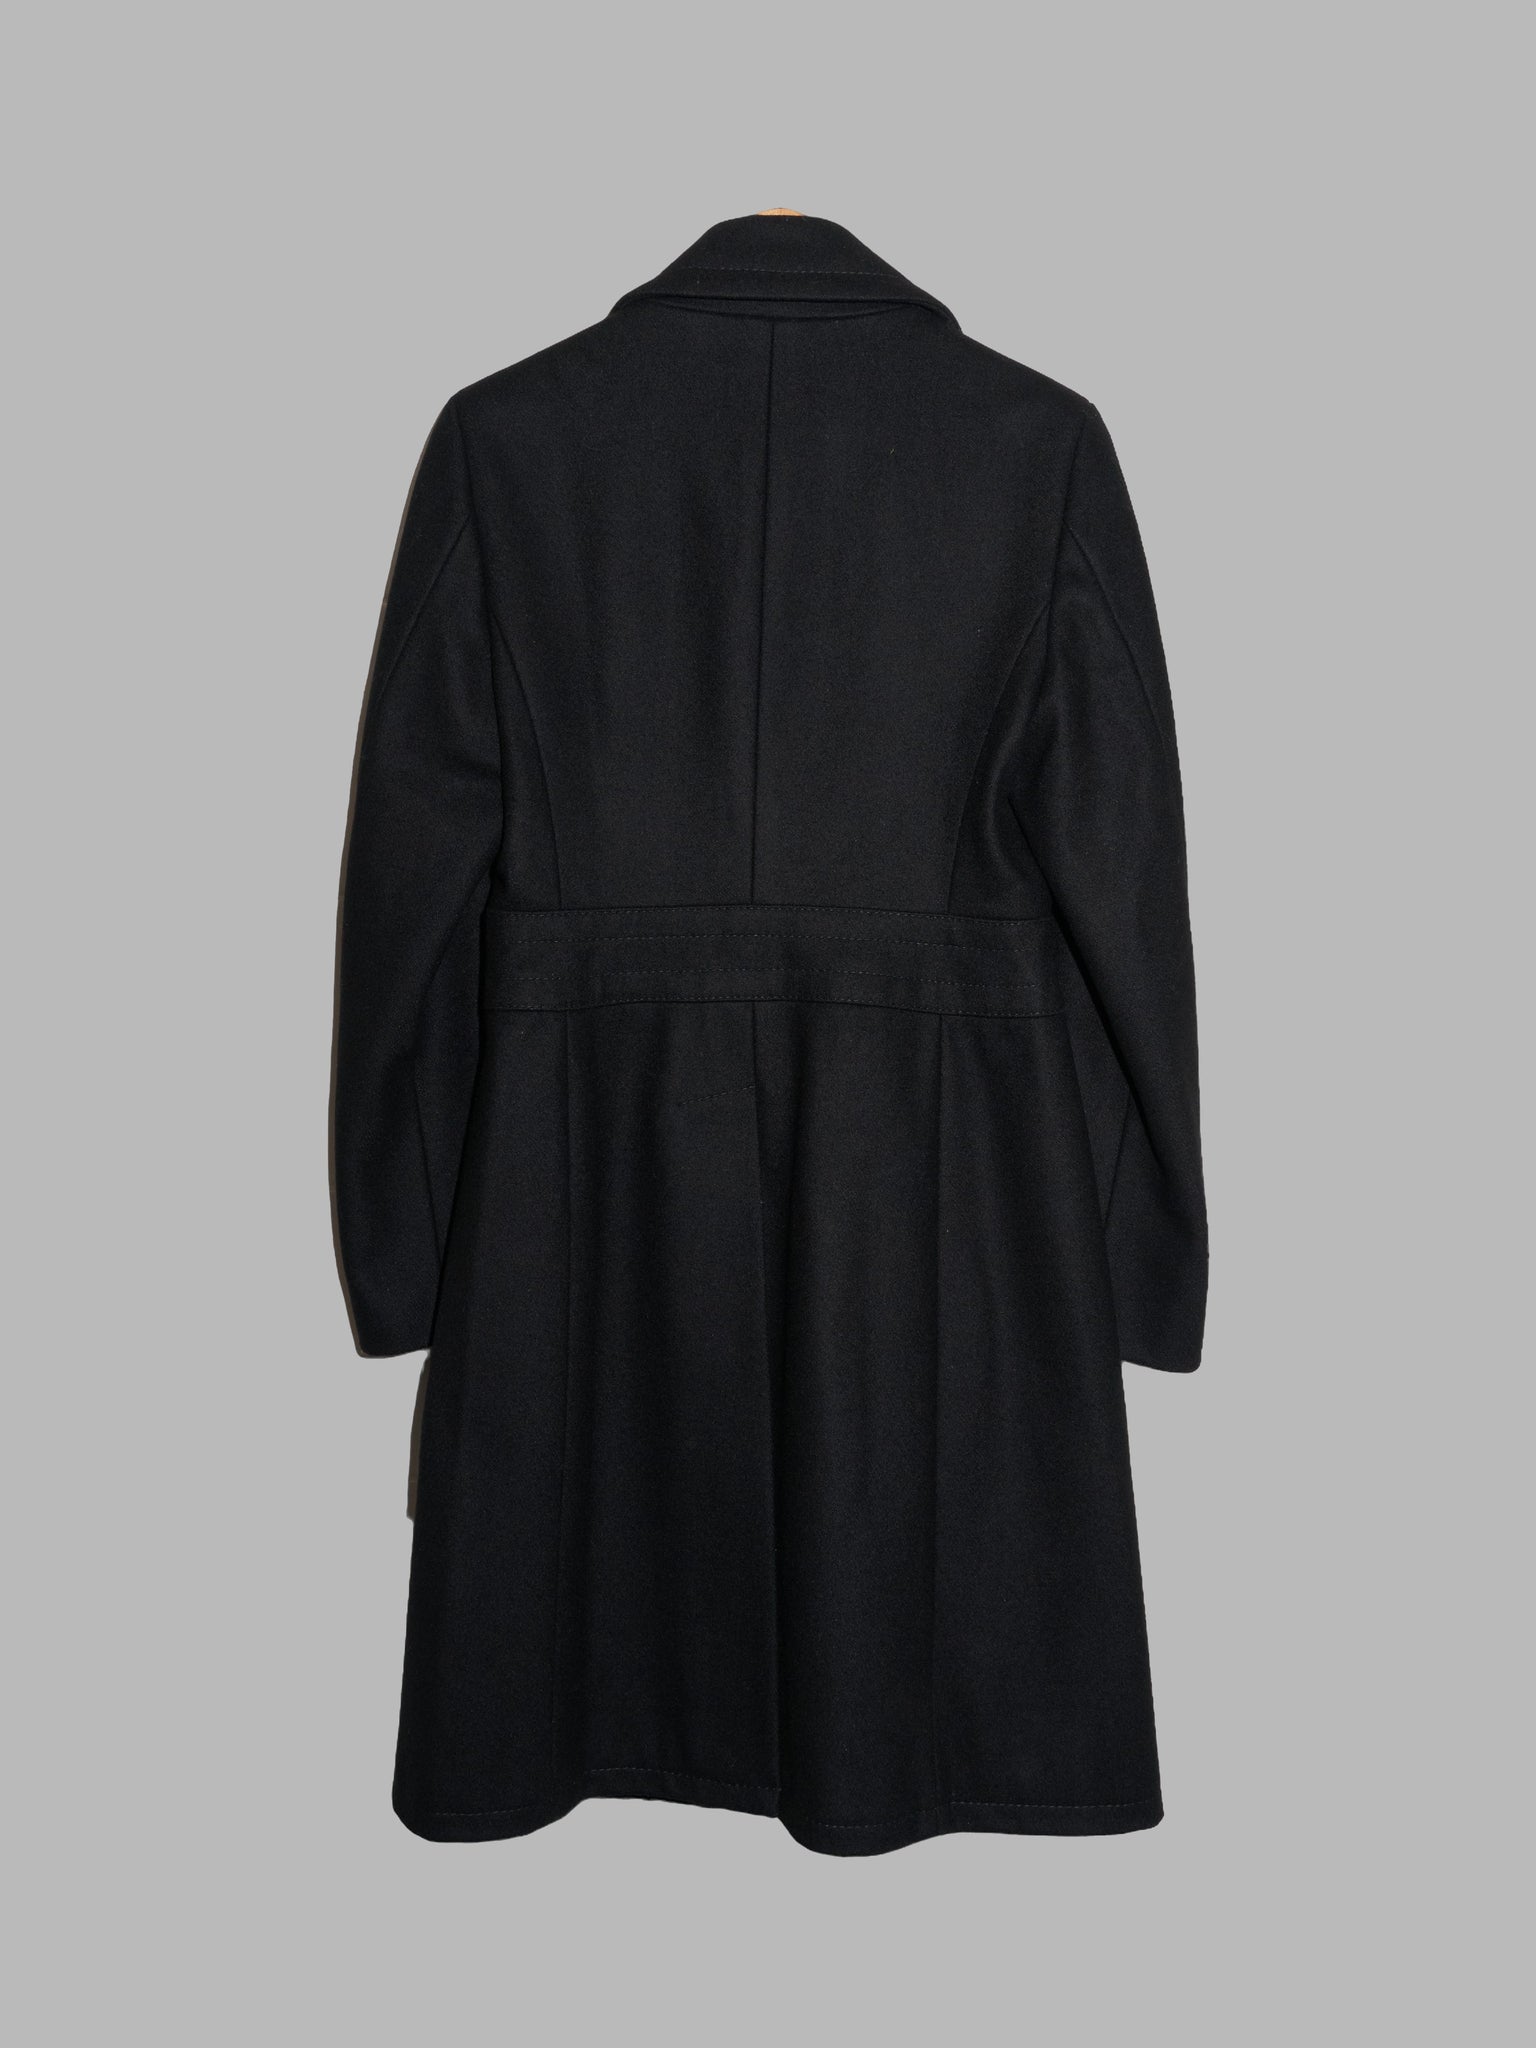 Dirk Bikkembergs 1990s black wool melton large peak lapel coat - size 40